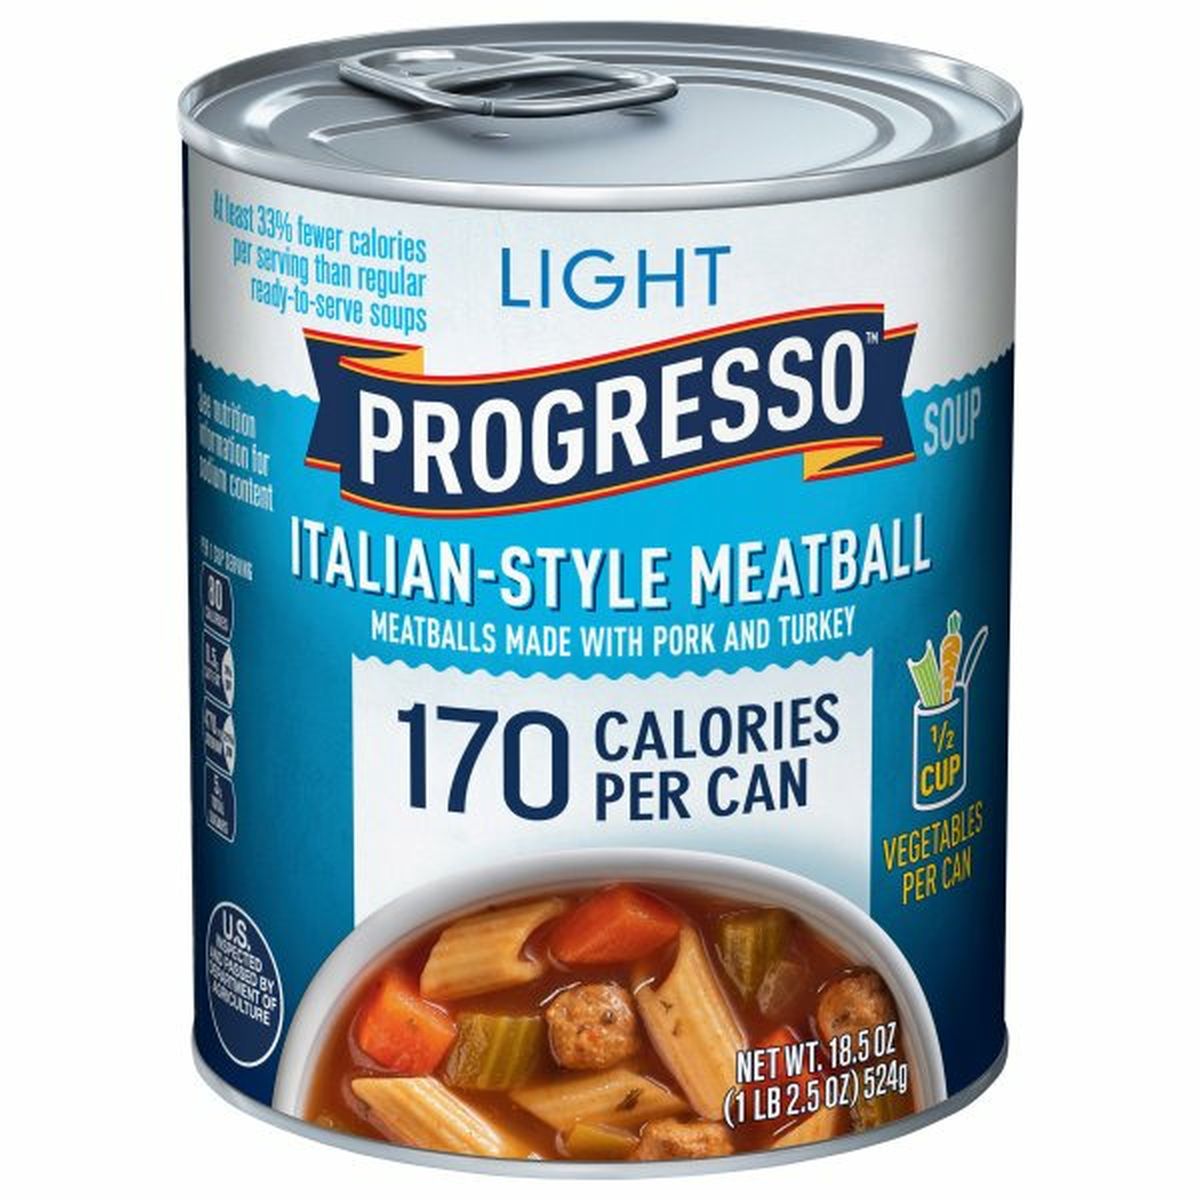 Calories in Progresso Soup, Italian-Style Meatball, Light